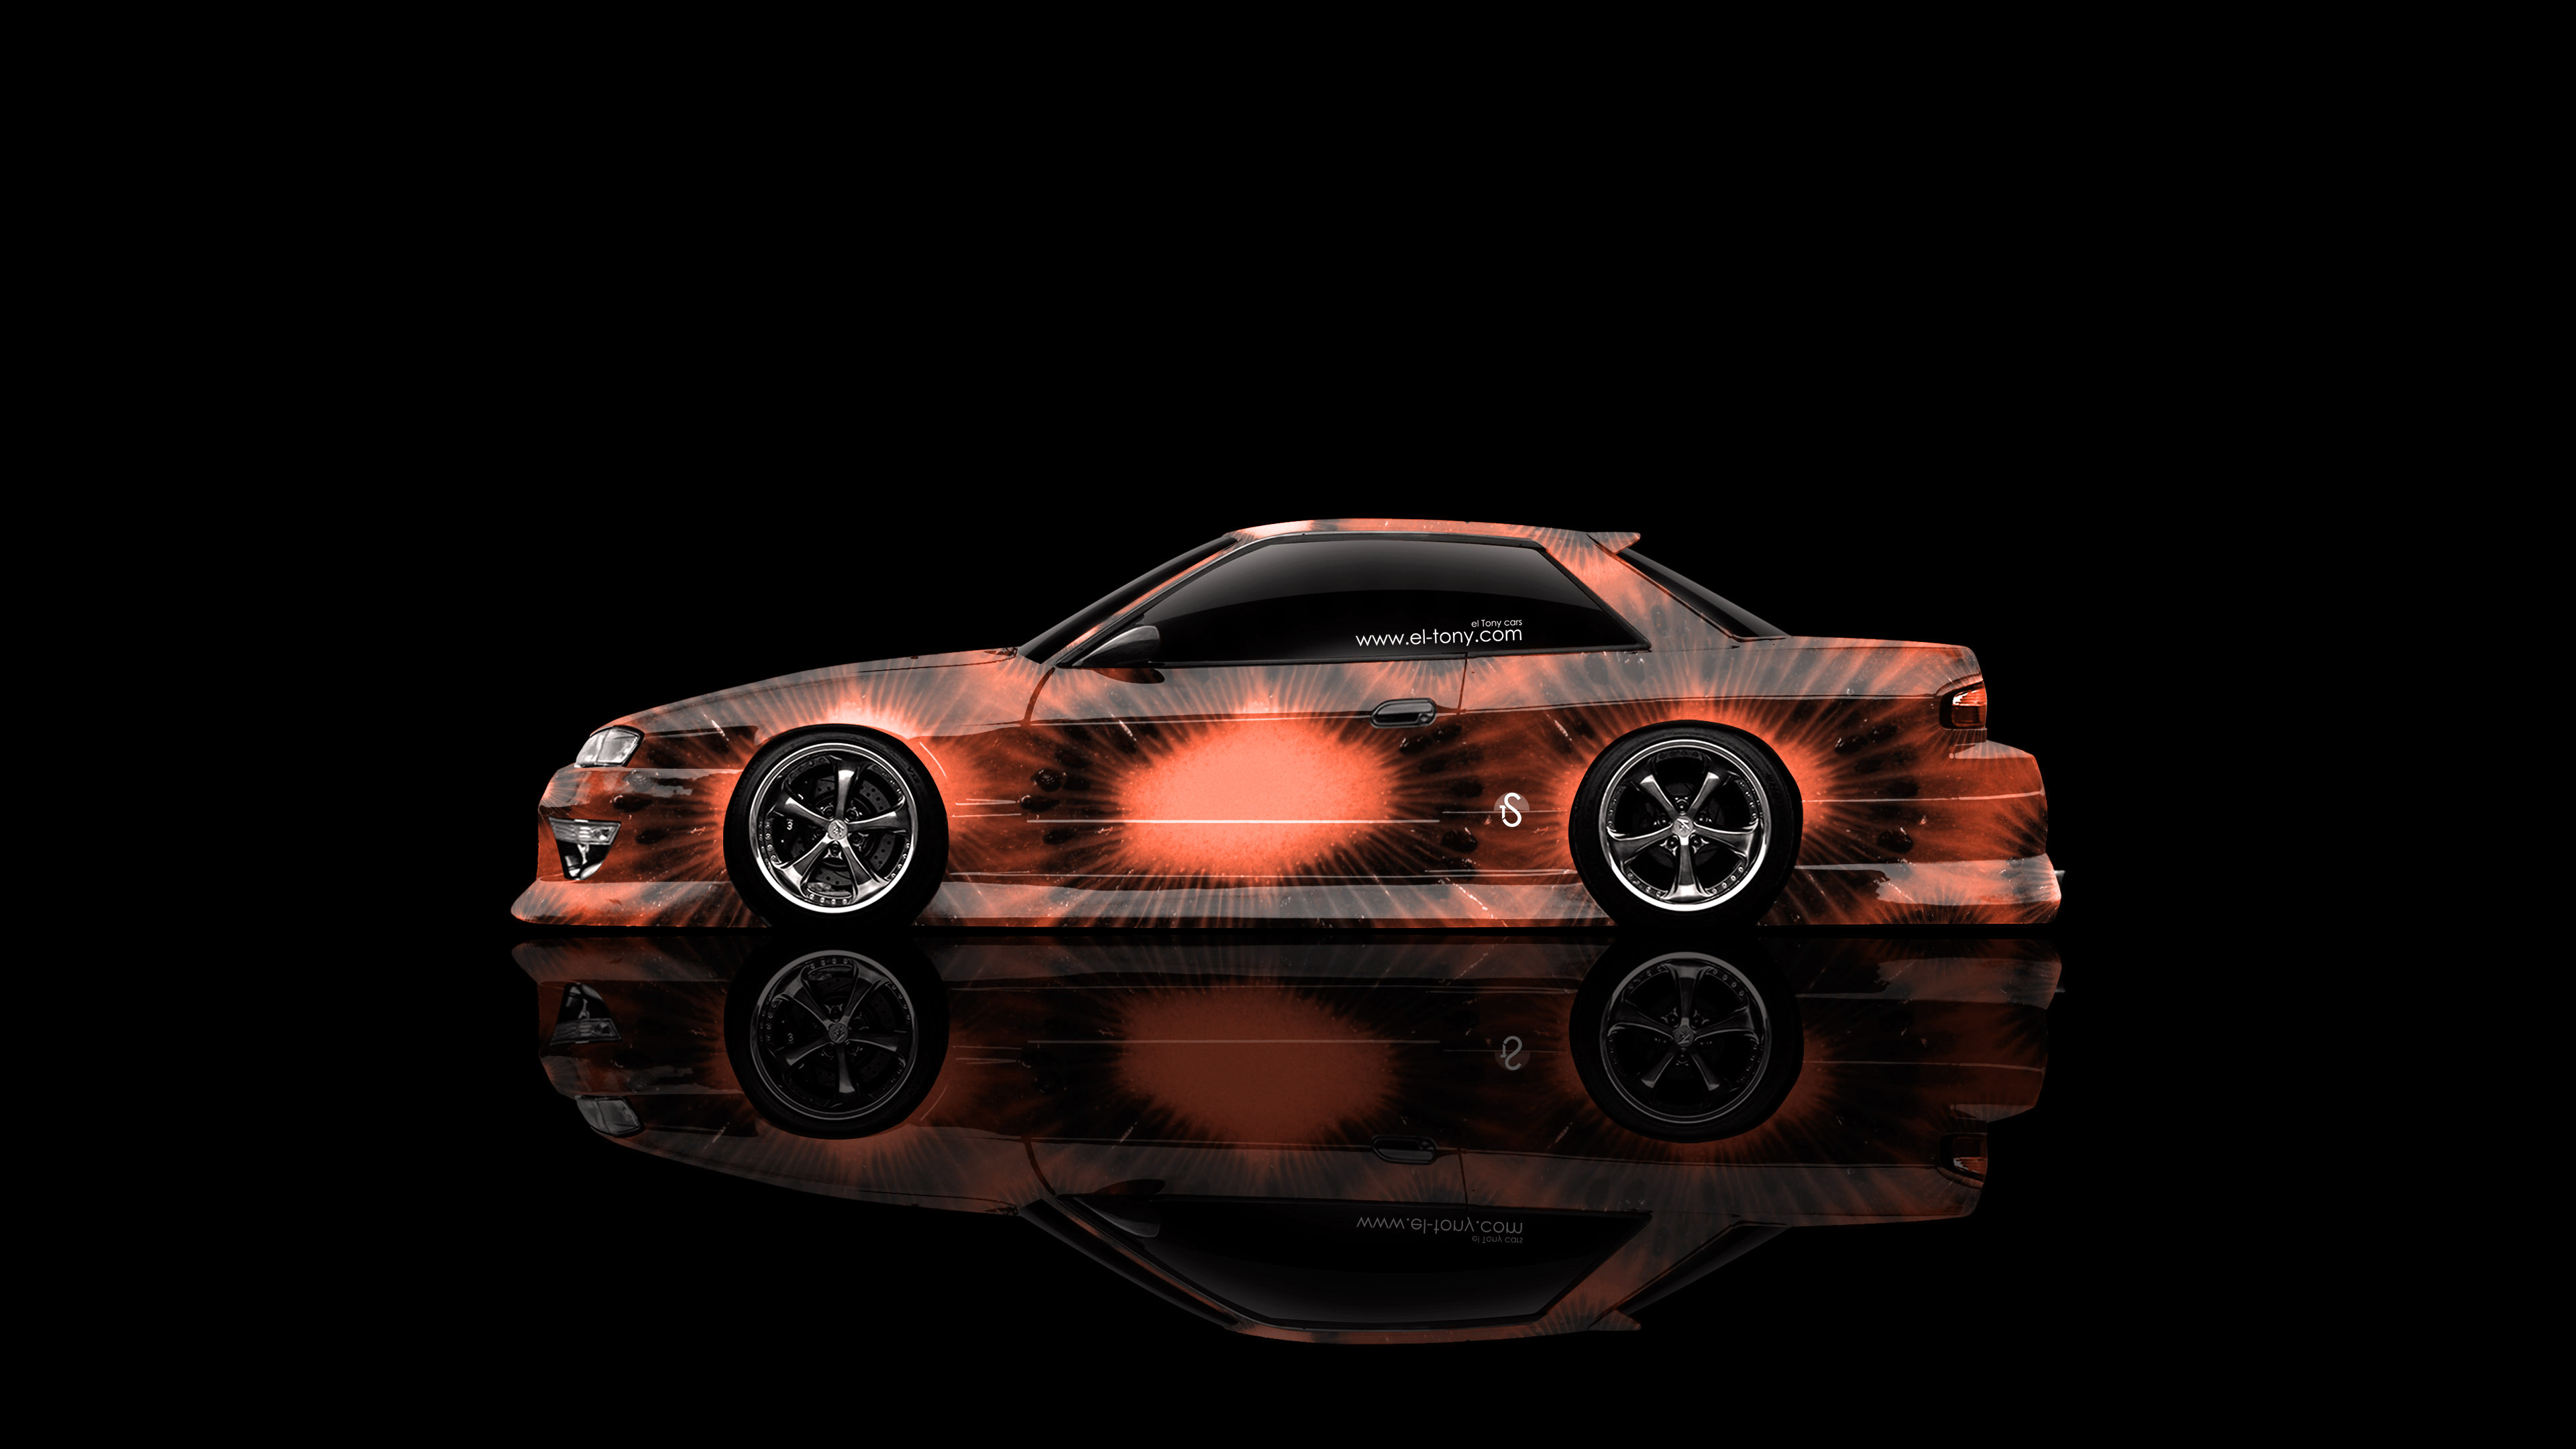  S13 JDM Side Kiwi Aerography Car 2014 Orange Colors 4K Wallpapers